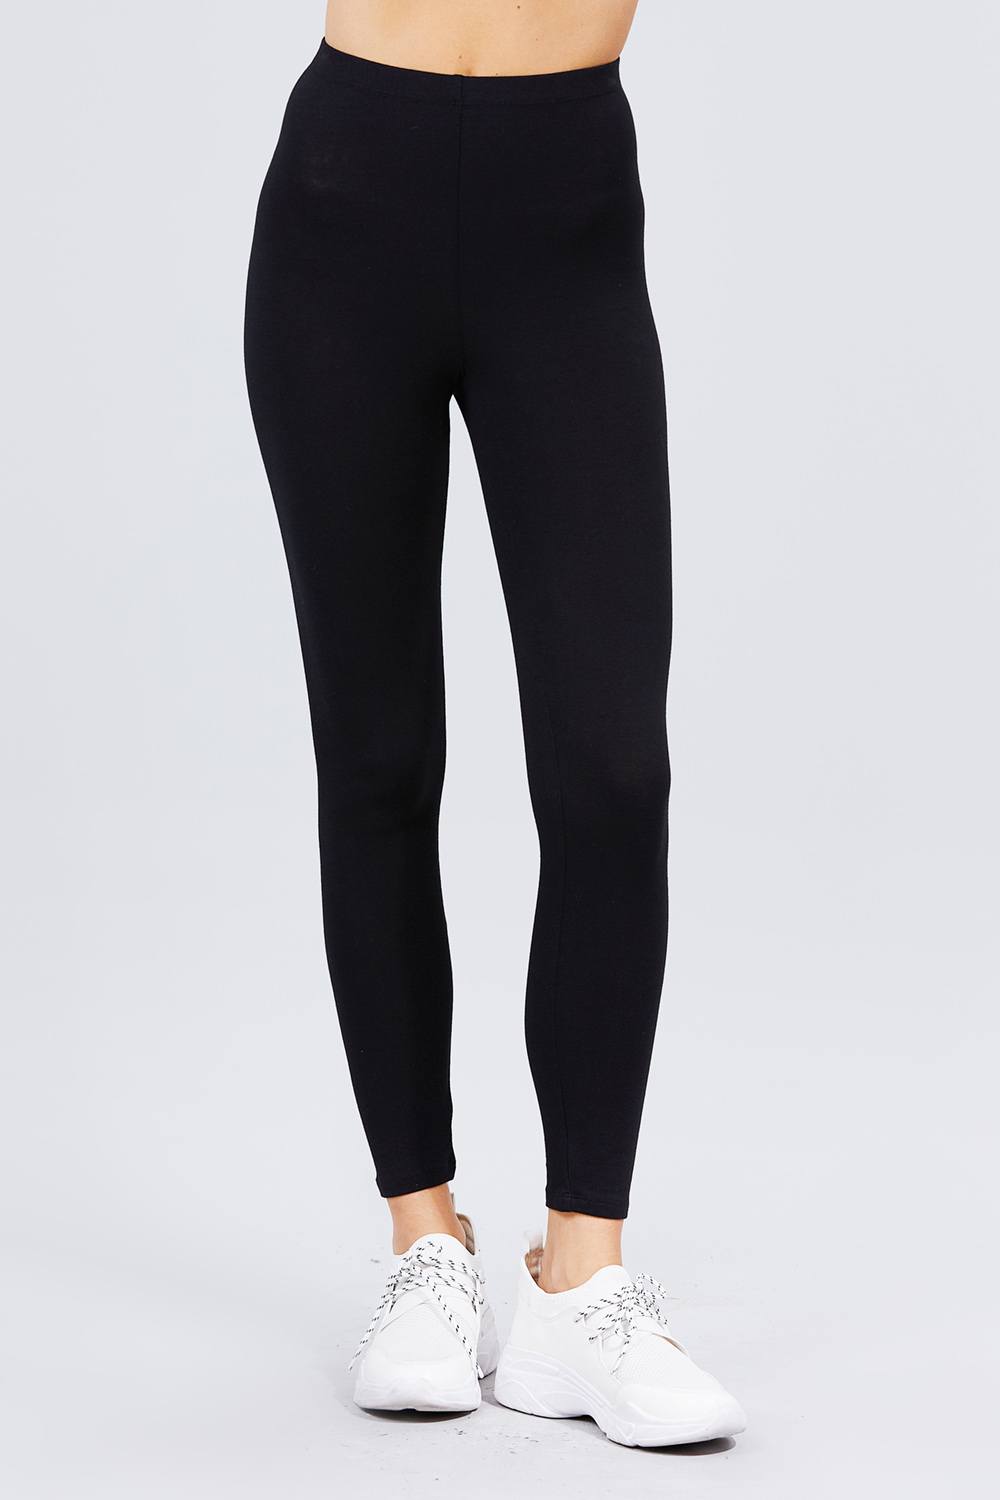 Cotton Spandex Jersey Long - Black / S Pants Girl Code